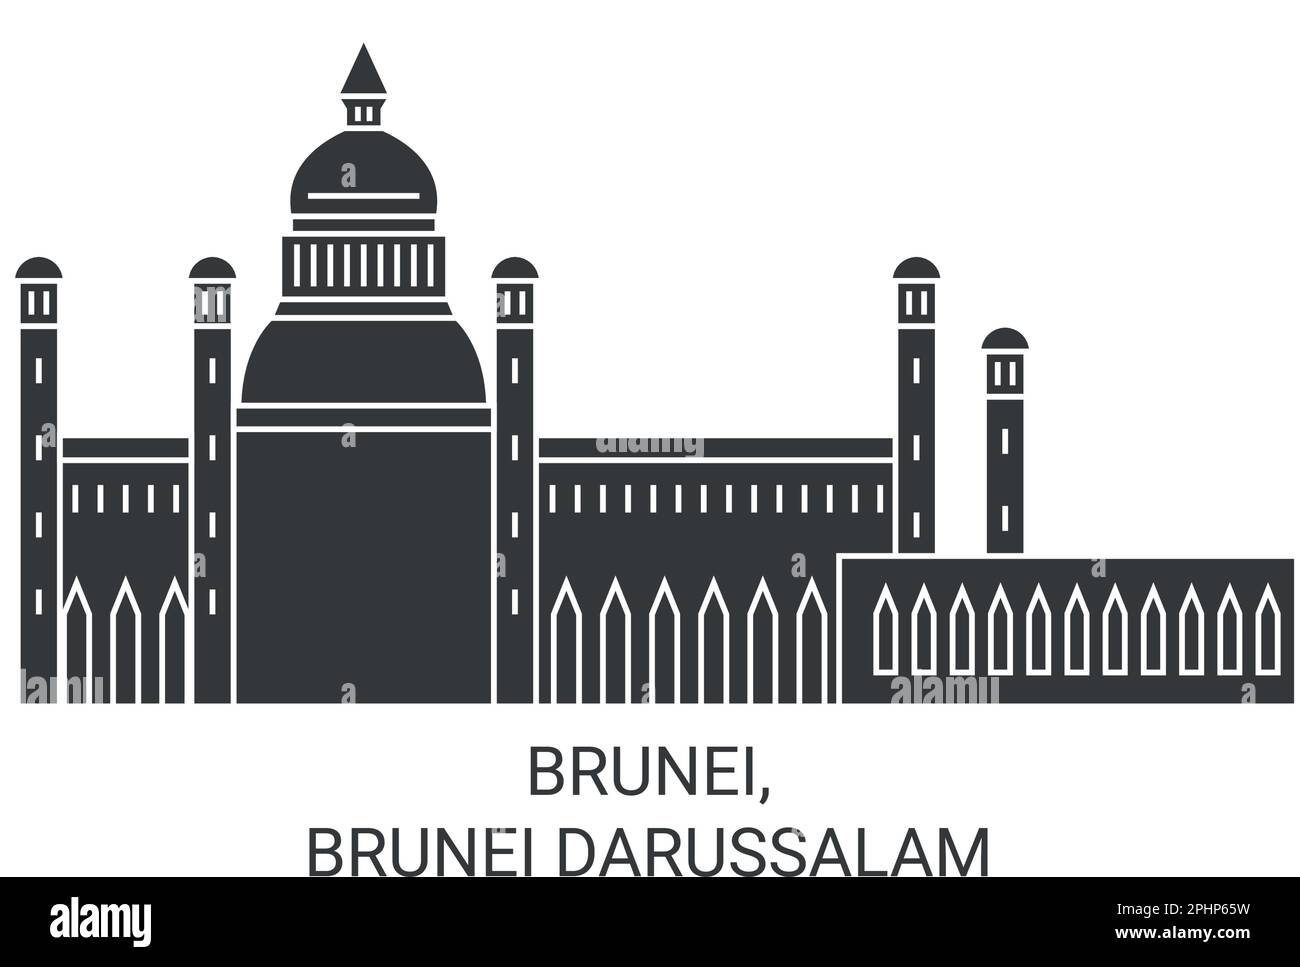 Brunei, Brunei Darussalam viaggio riferimento vettoriale illustrazione Illustrazione Vettoriale